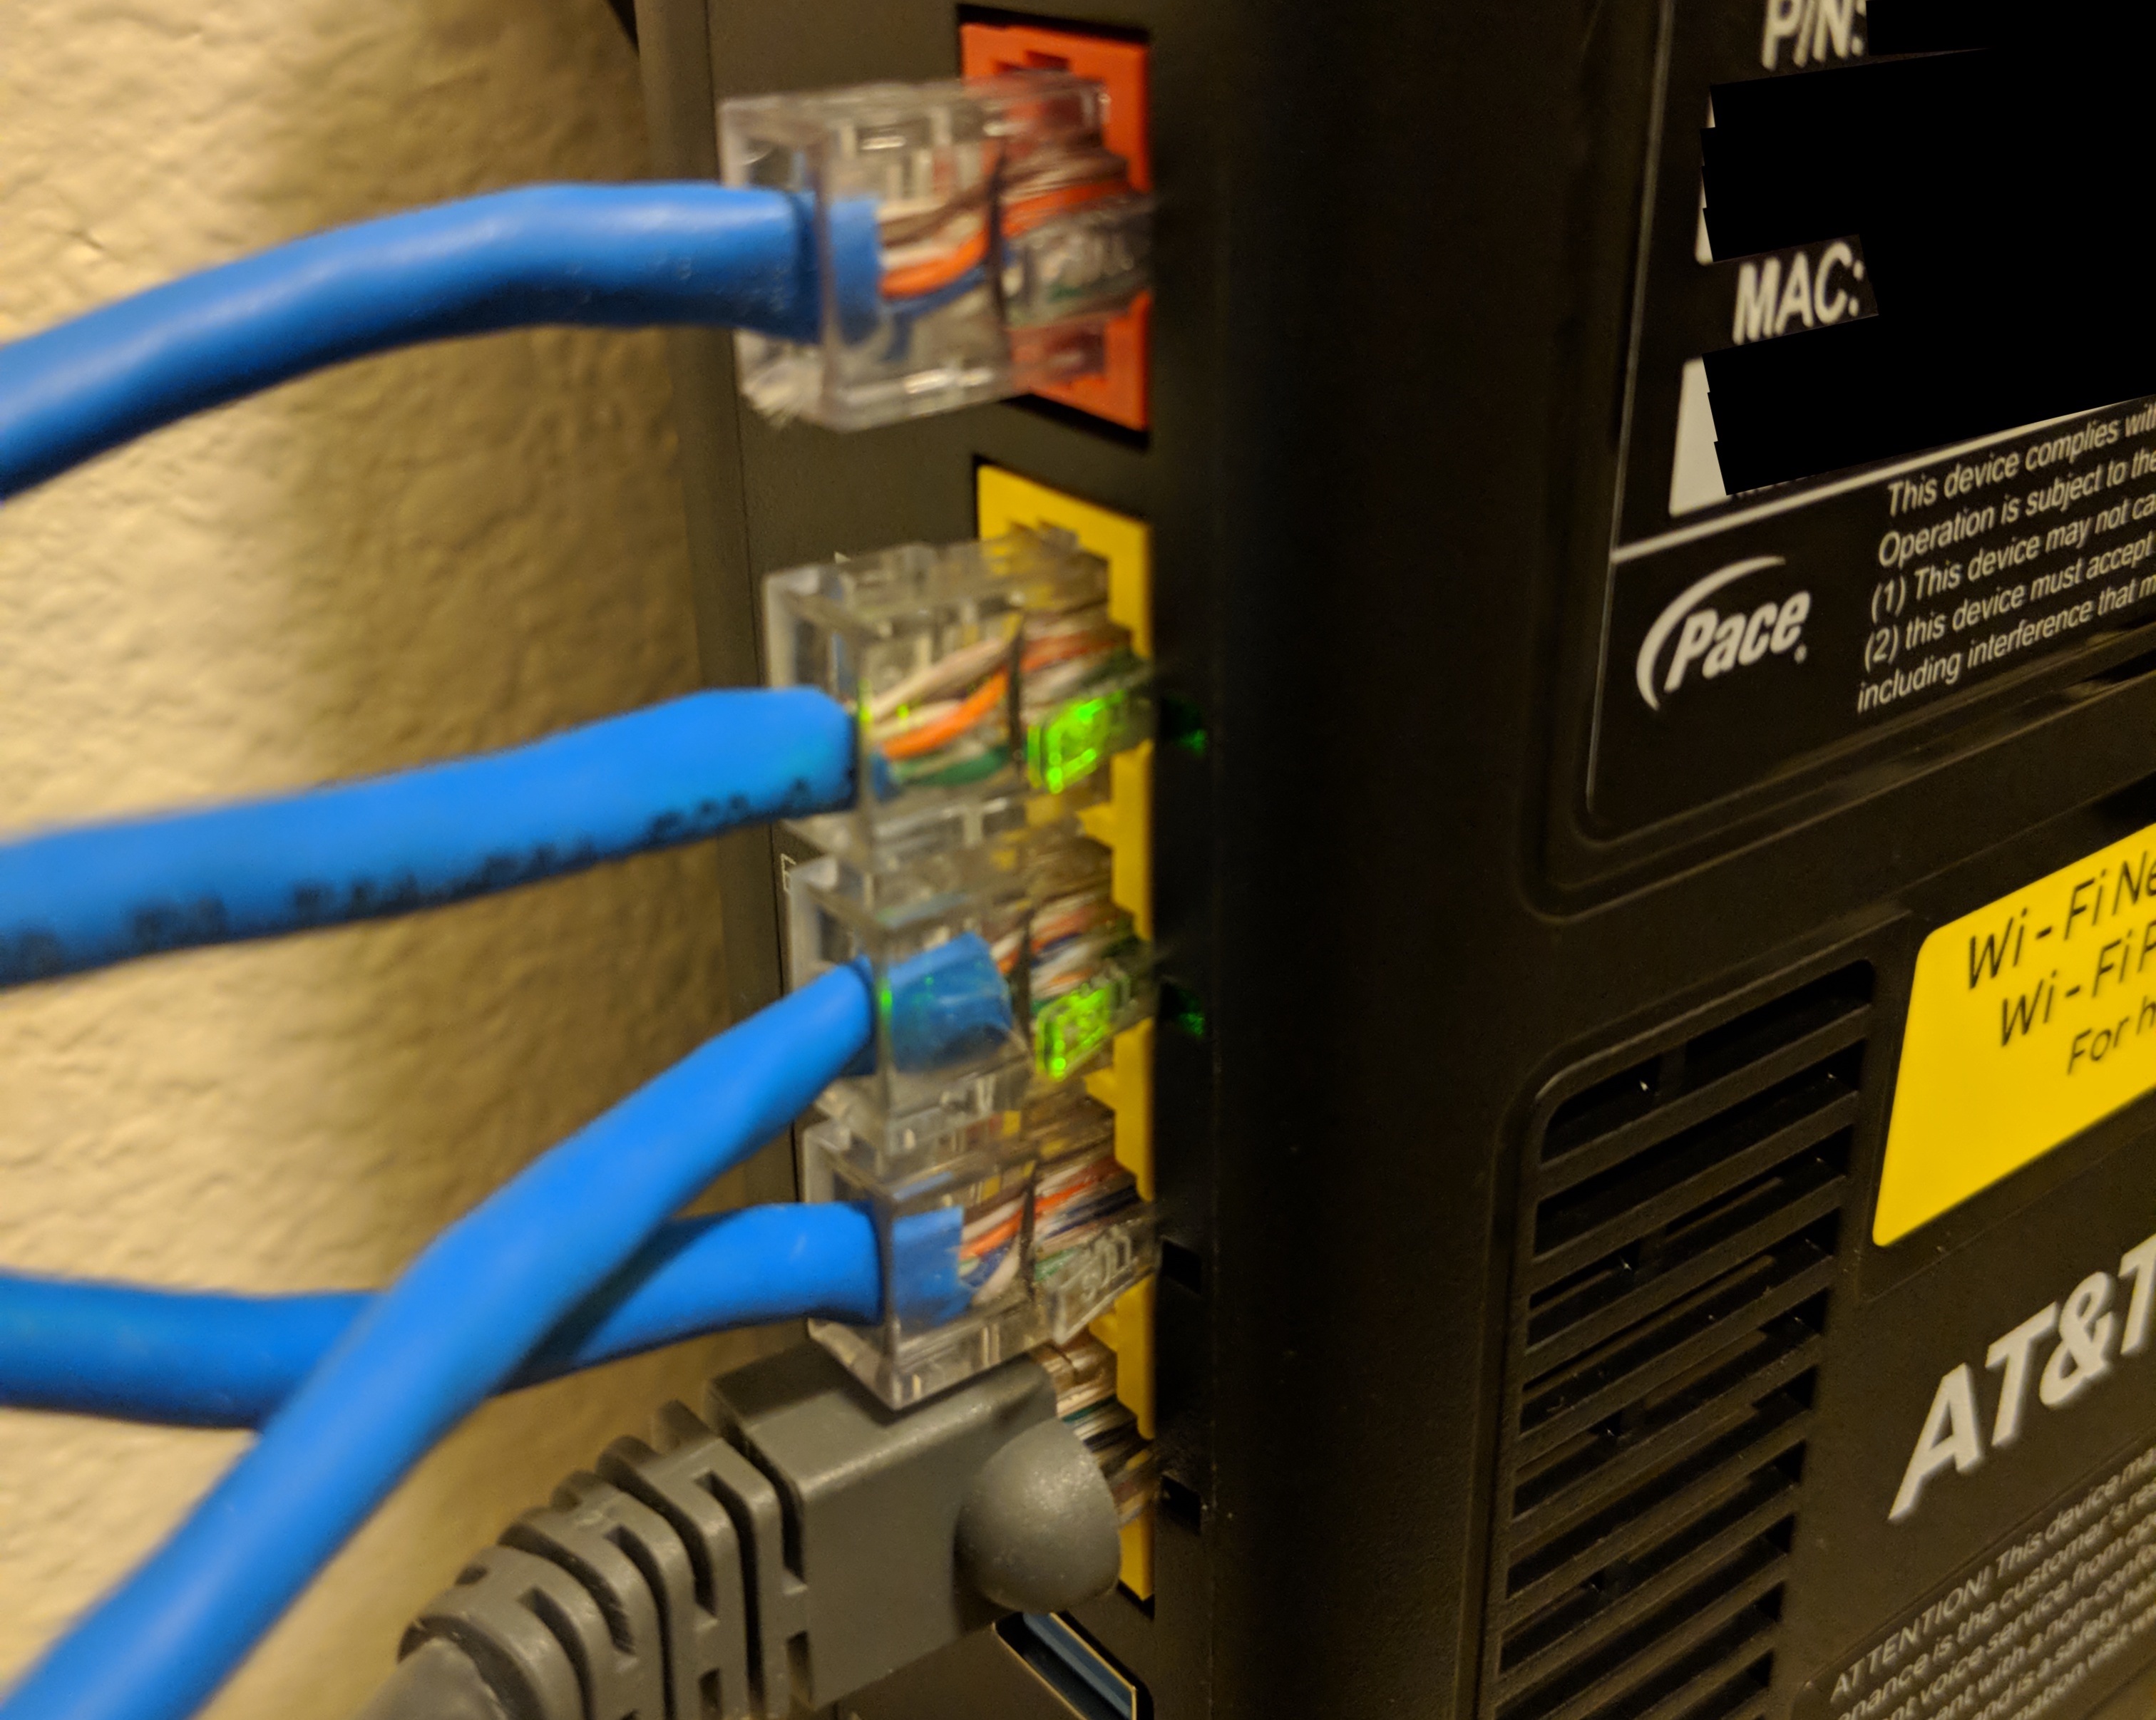 Getting an Ethernet port back